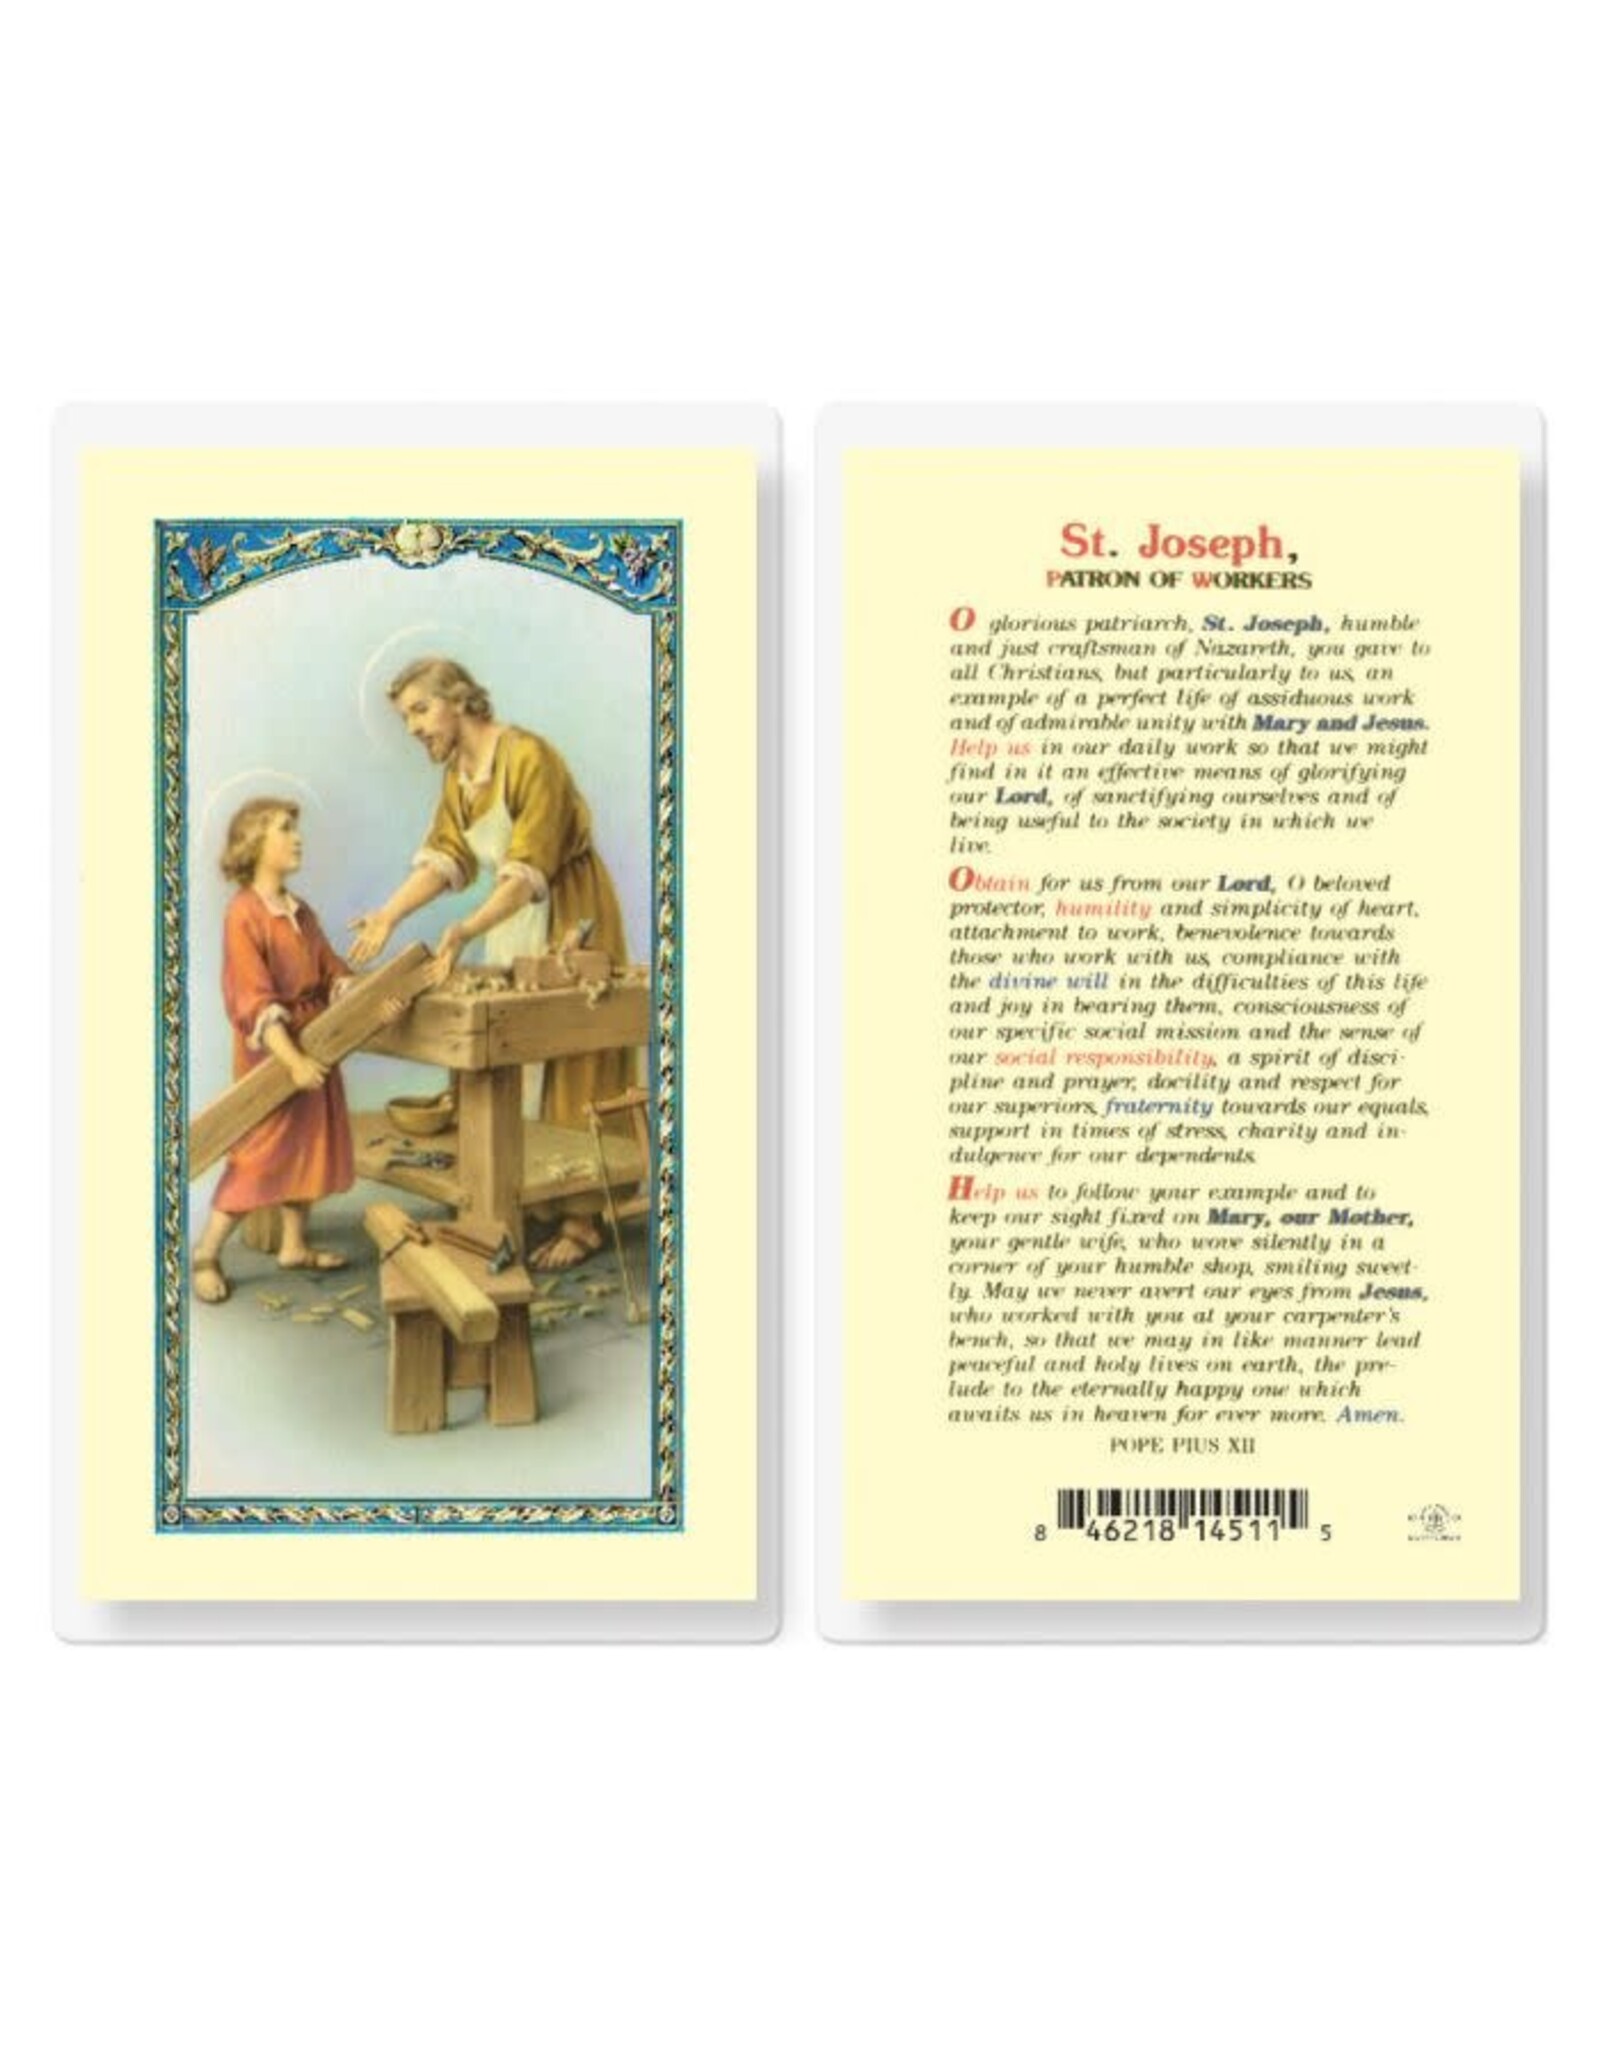 Hirten Holy Card, Laminated - St. Joseph Patron of Workers